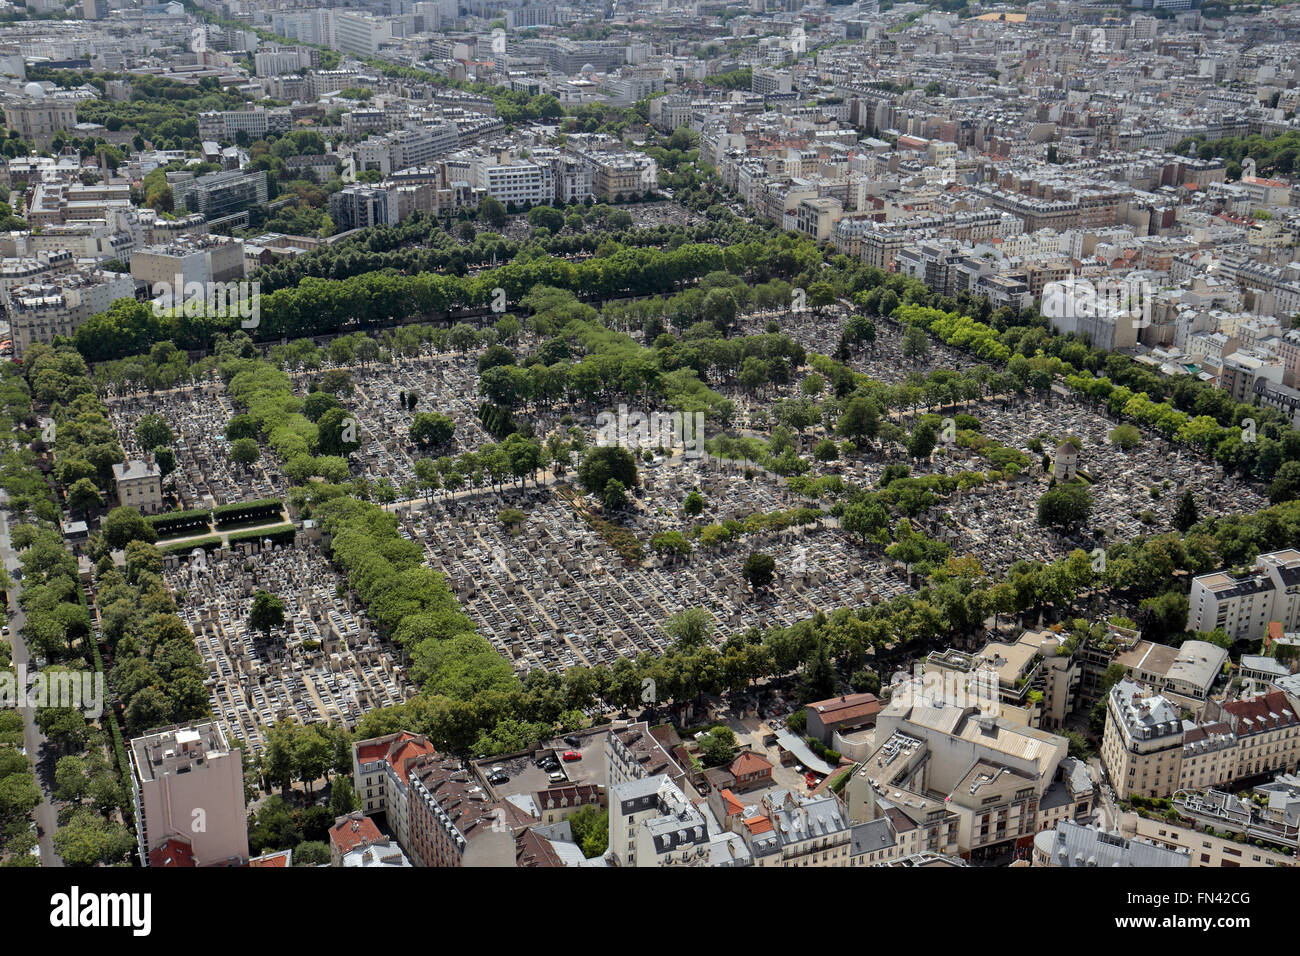 Looking down on the Cimetière du Montparnasse Paris, France from the Tour Montparnasse. Stock Photo